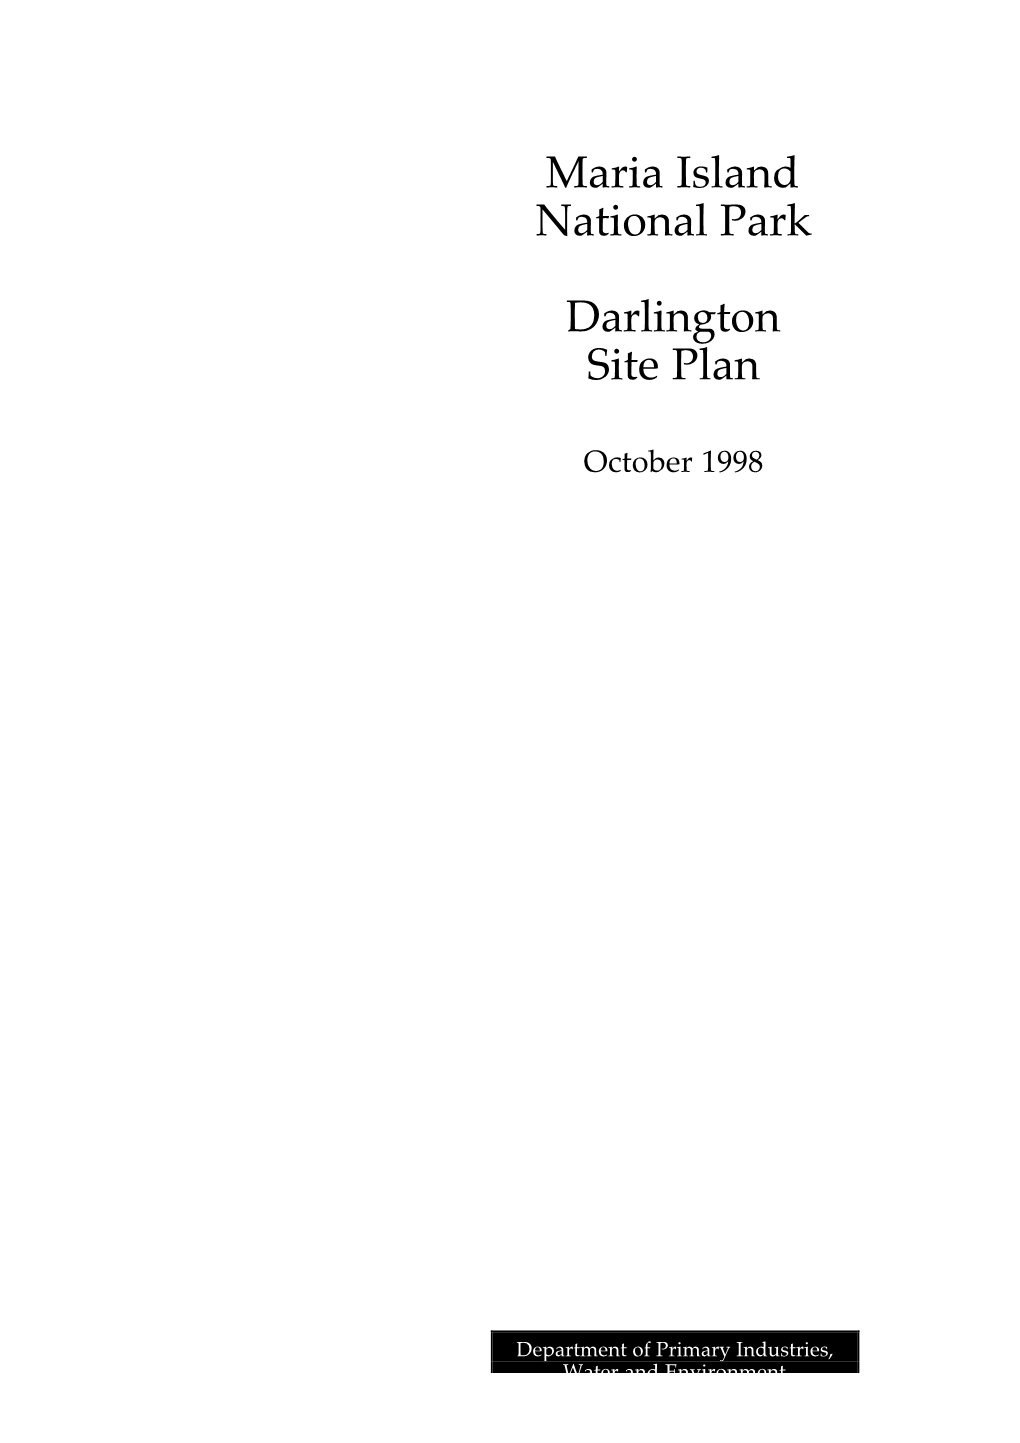 Maria Island National Park Darlington Site Plan 1998